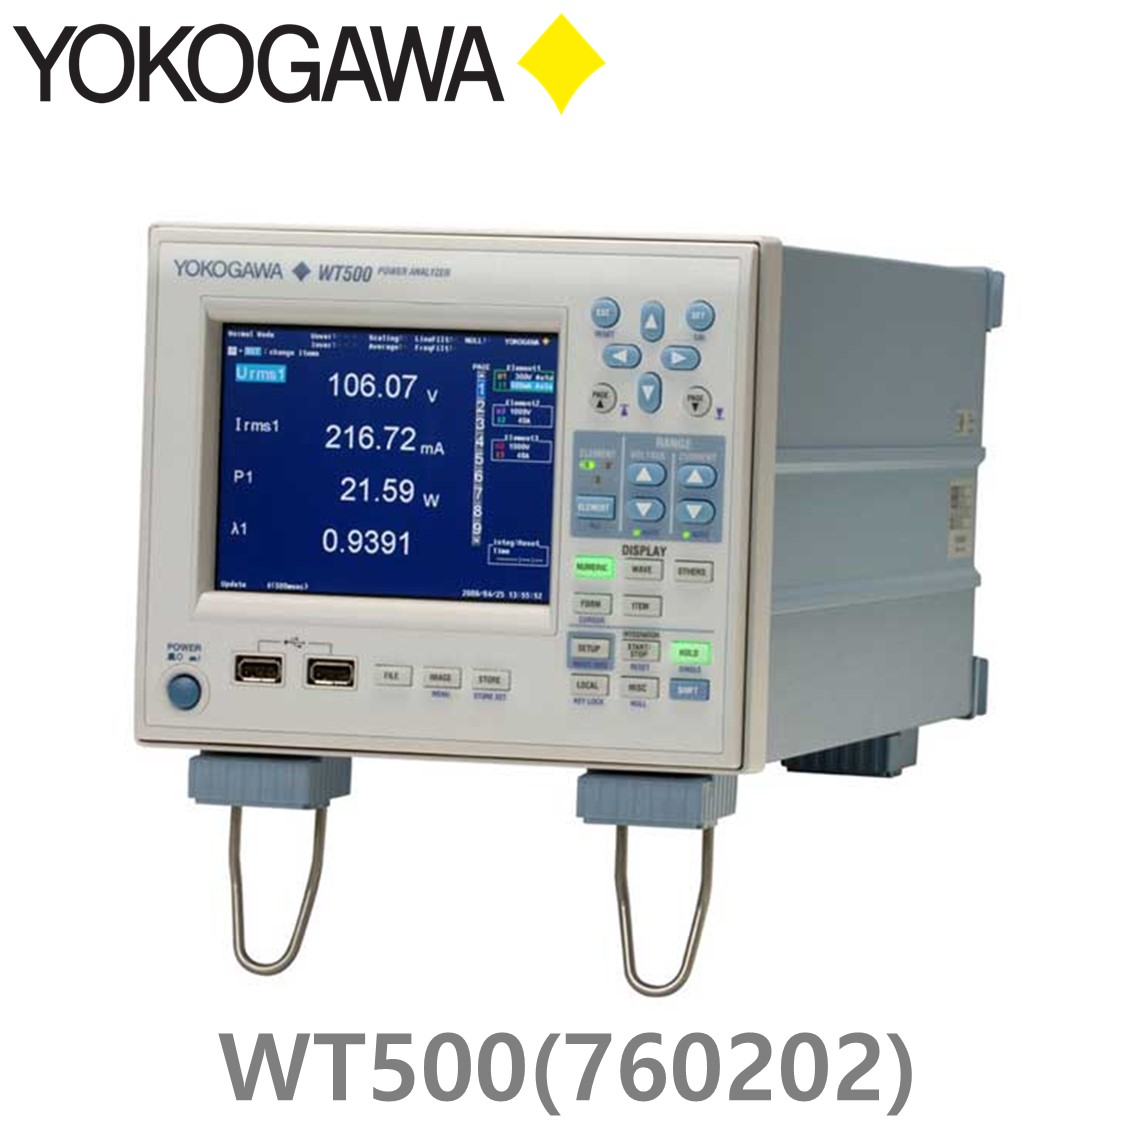 [ YOKOGAWA ] WT500(760202) 요꼬가와 전력분석기, 전력분석계